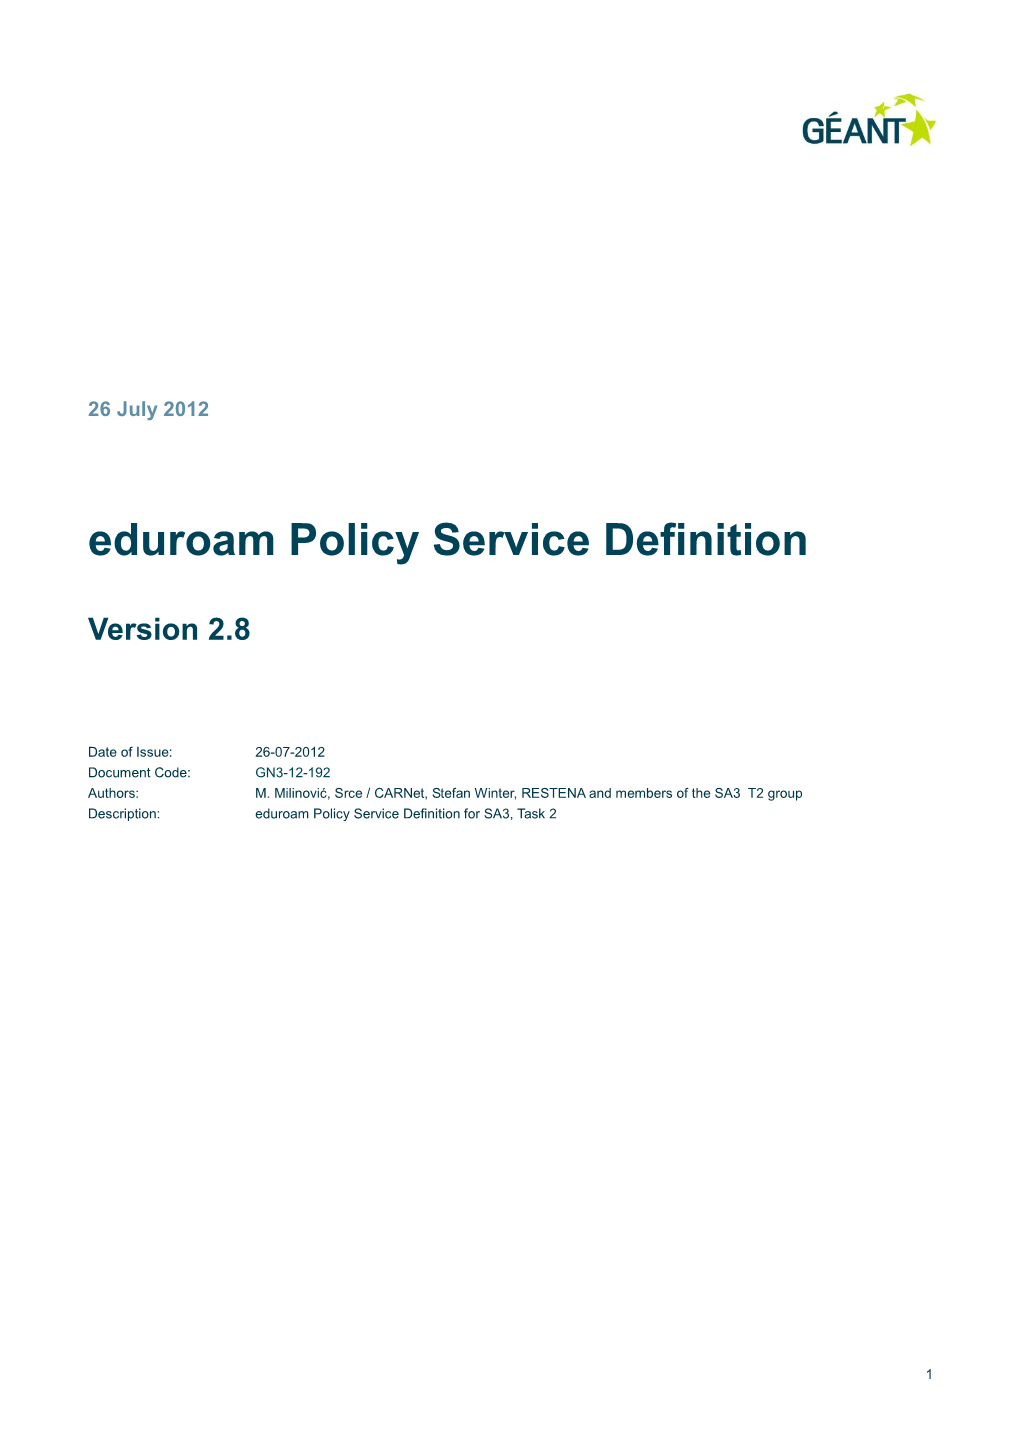 Eduroam Policy Service Definition